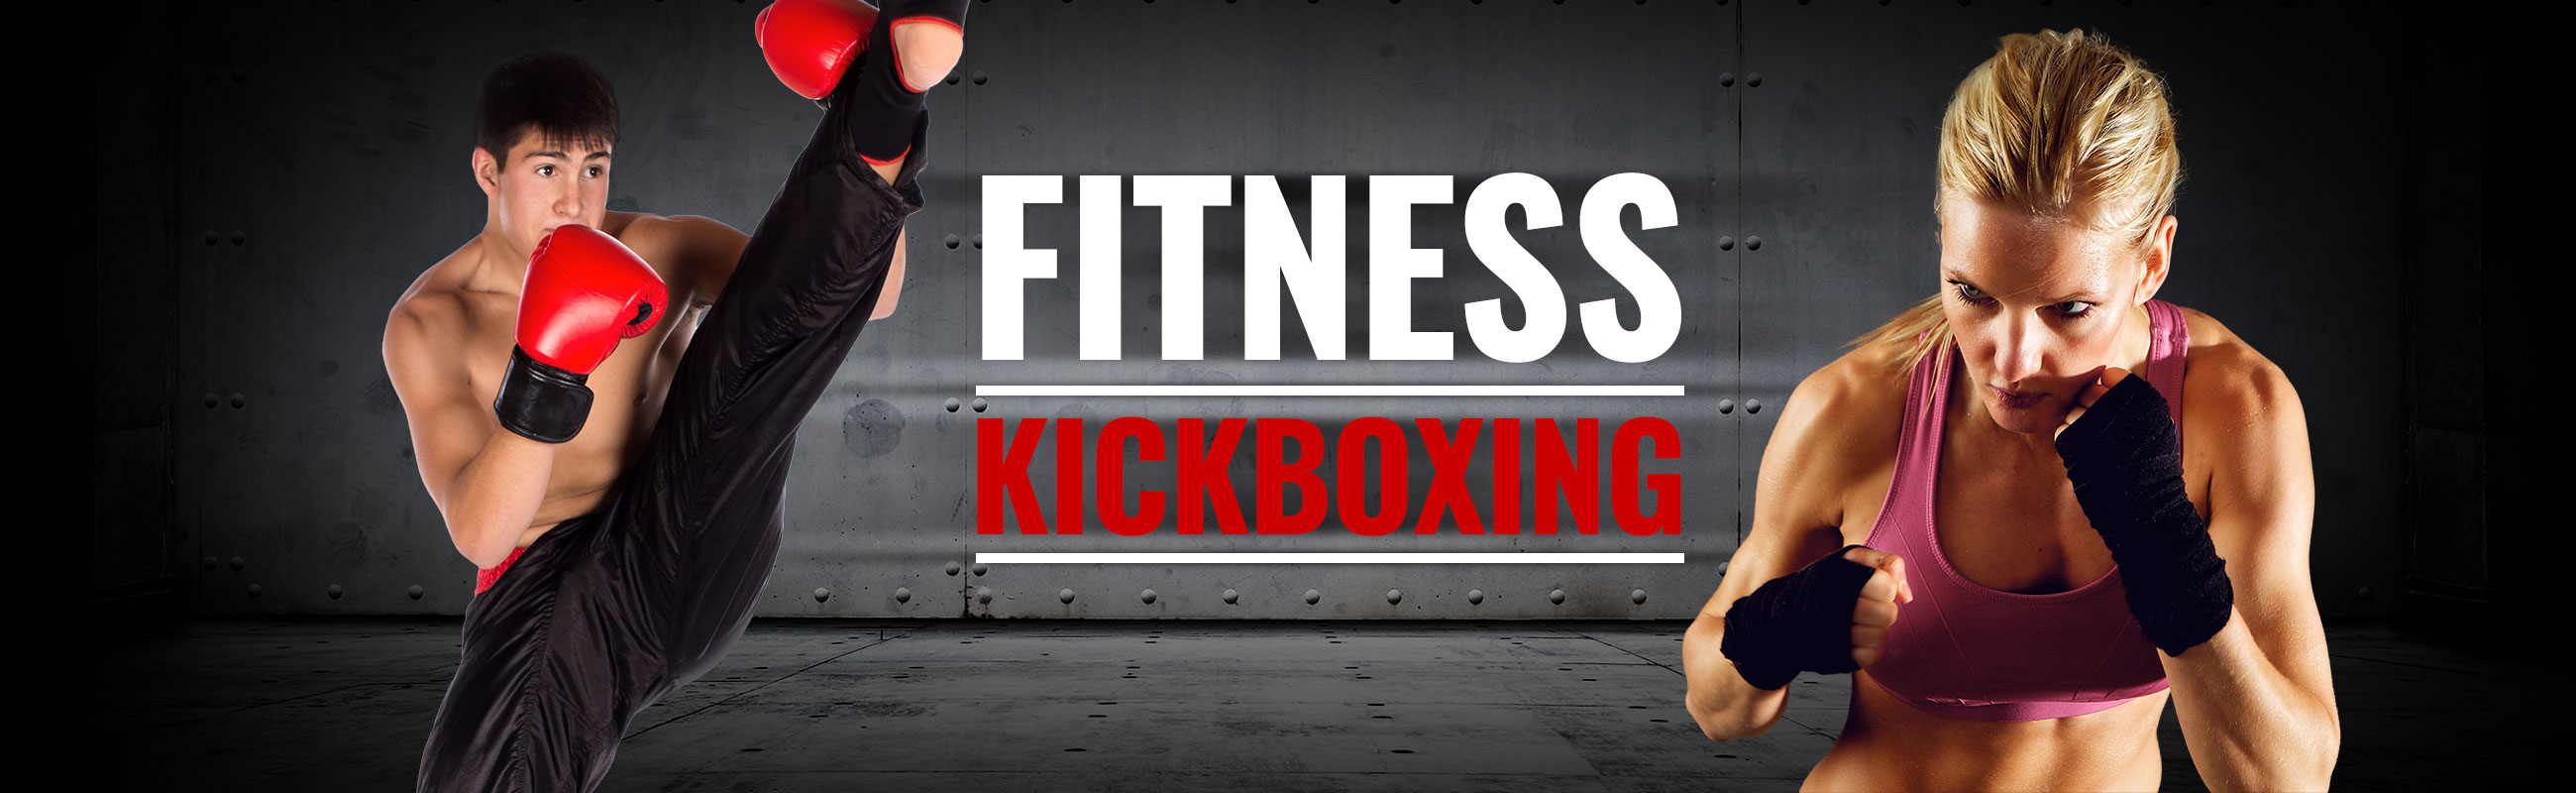 fitness kickboxing